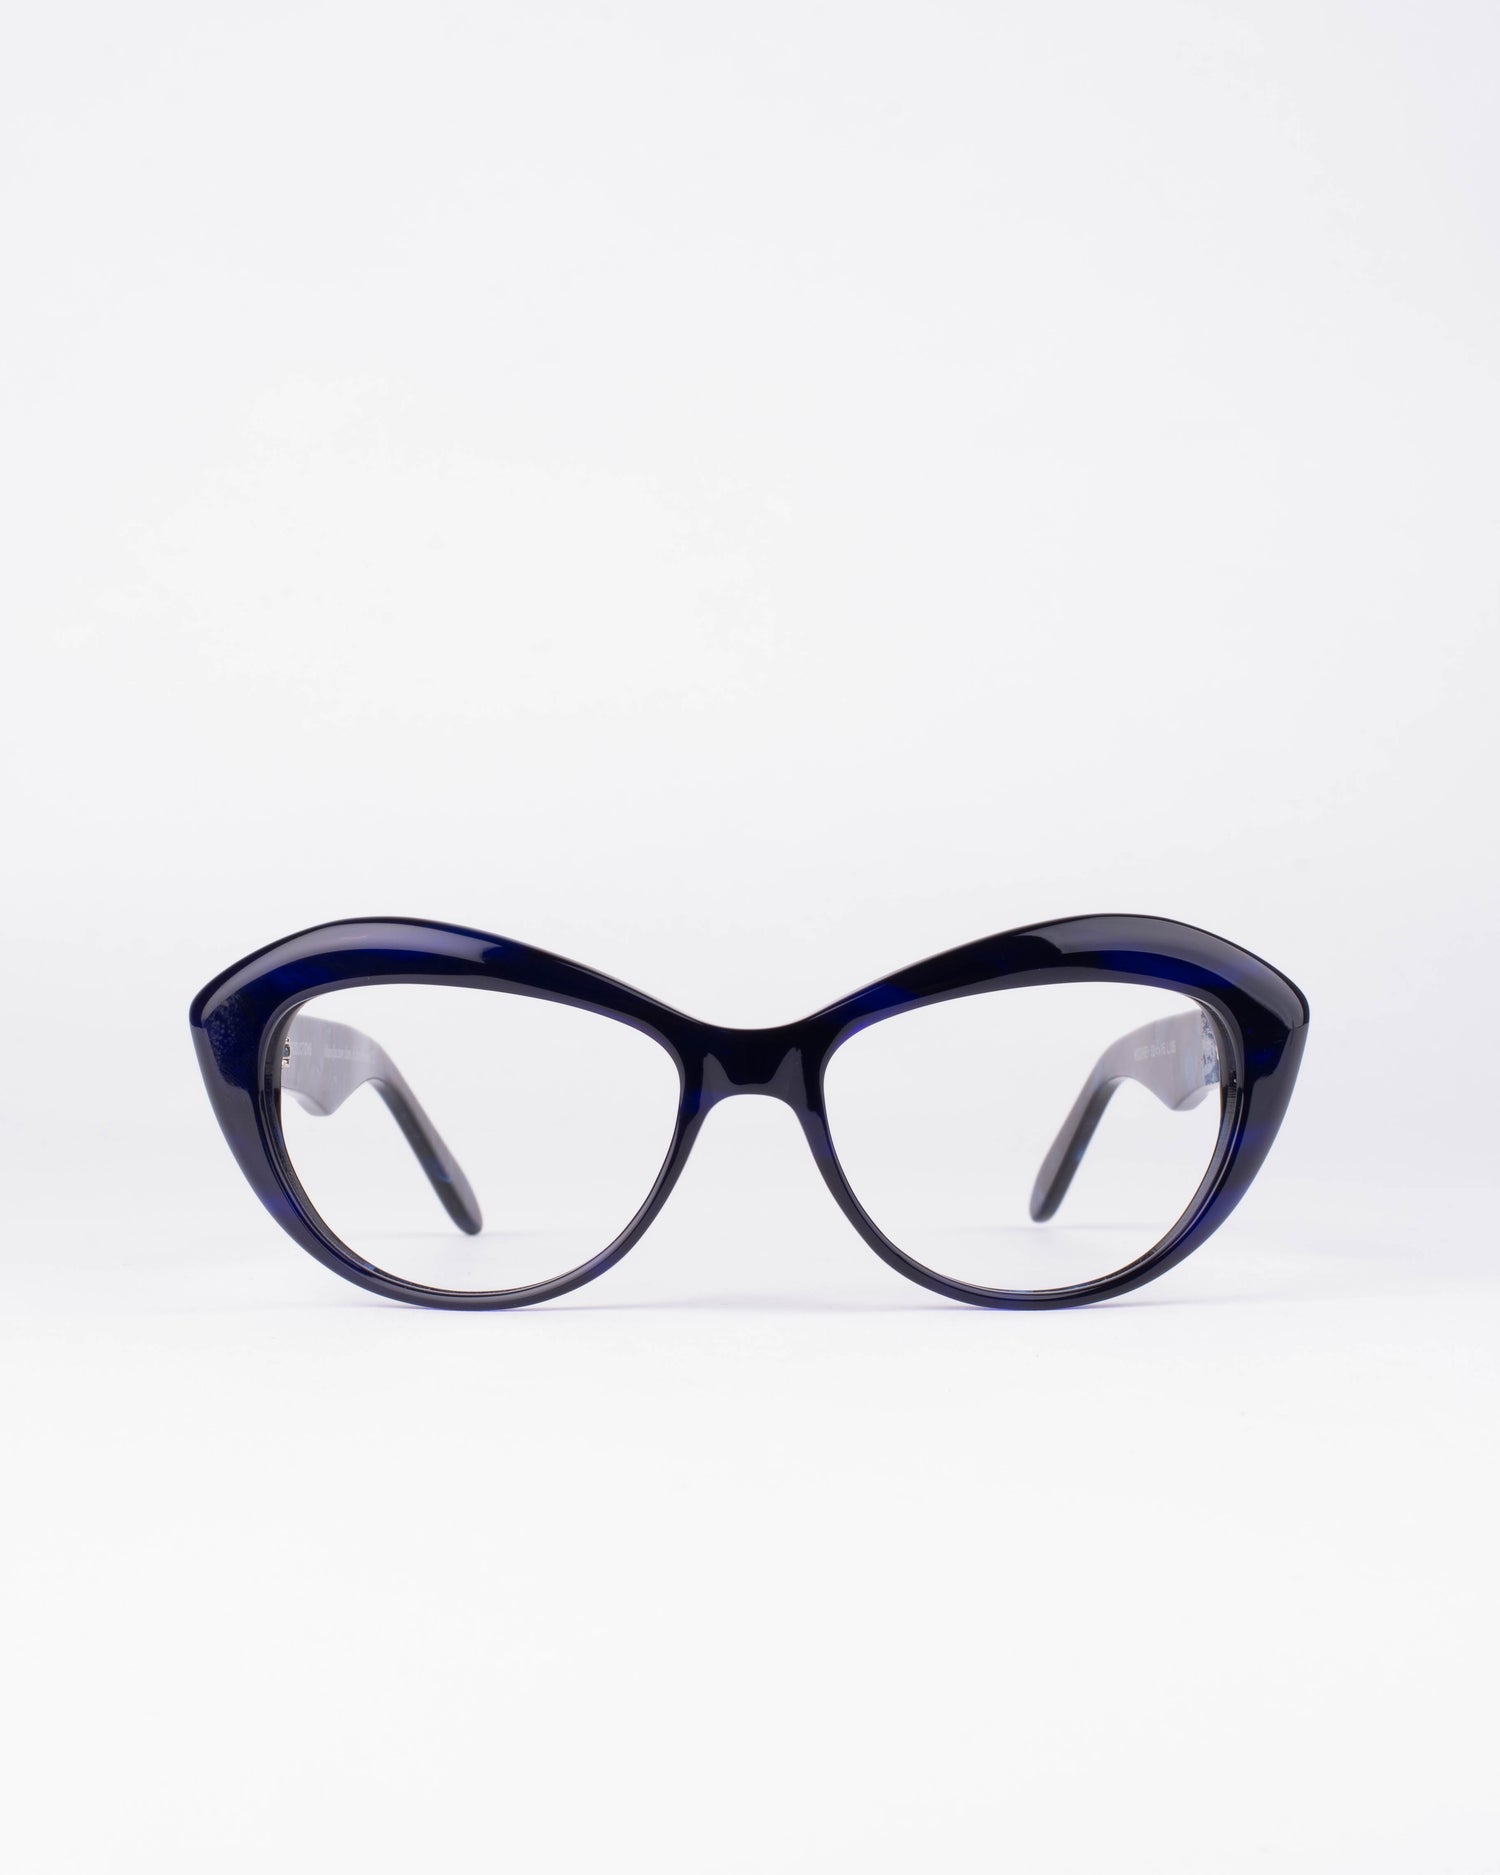 Traction - hockney - marblue | glasses bar:  Marie-Sophie Dion